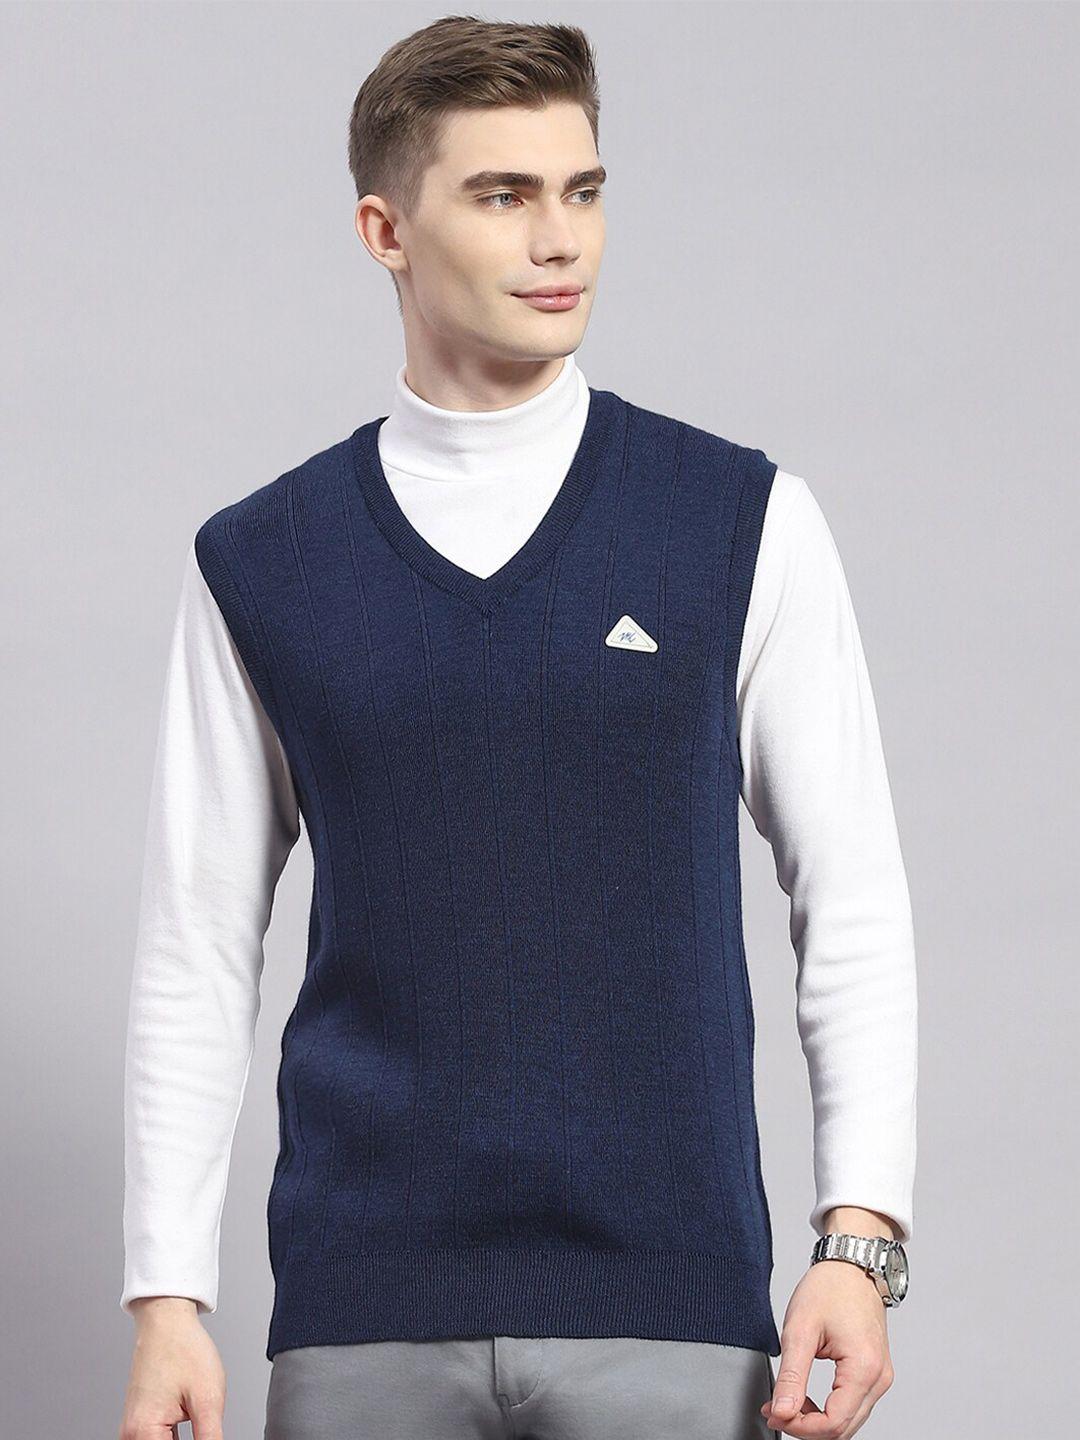 monte-carlo-striped-sleeveless-woollen-sweater-vest